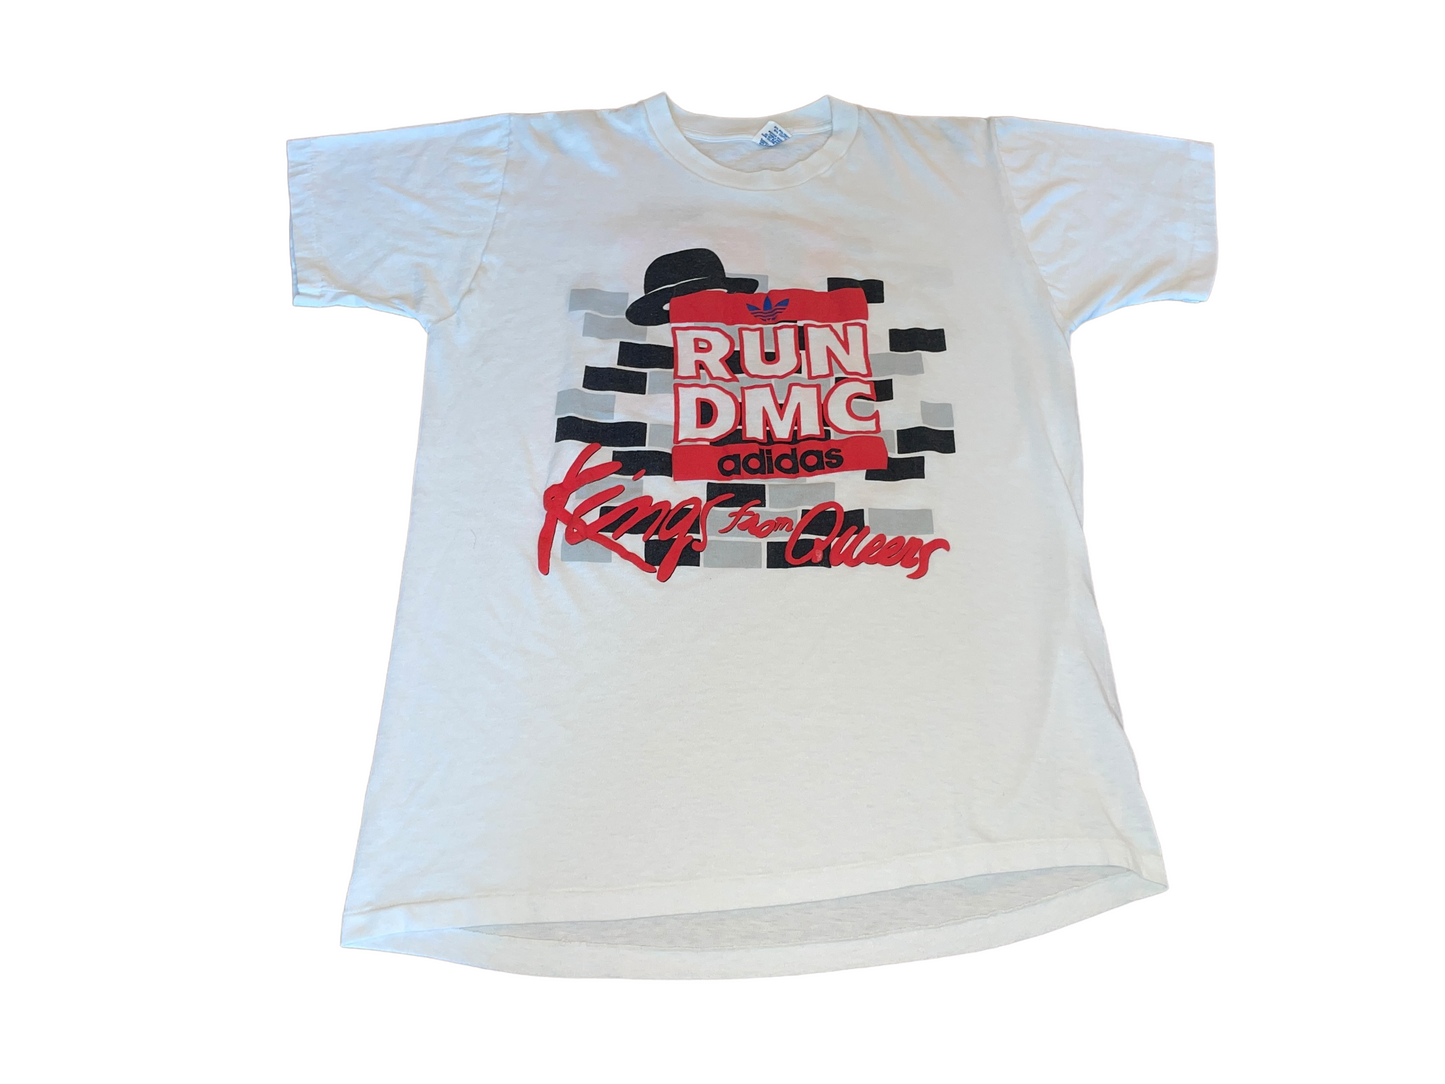 Vintage 80's Run DMC Adidas T-Shirt